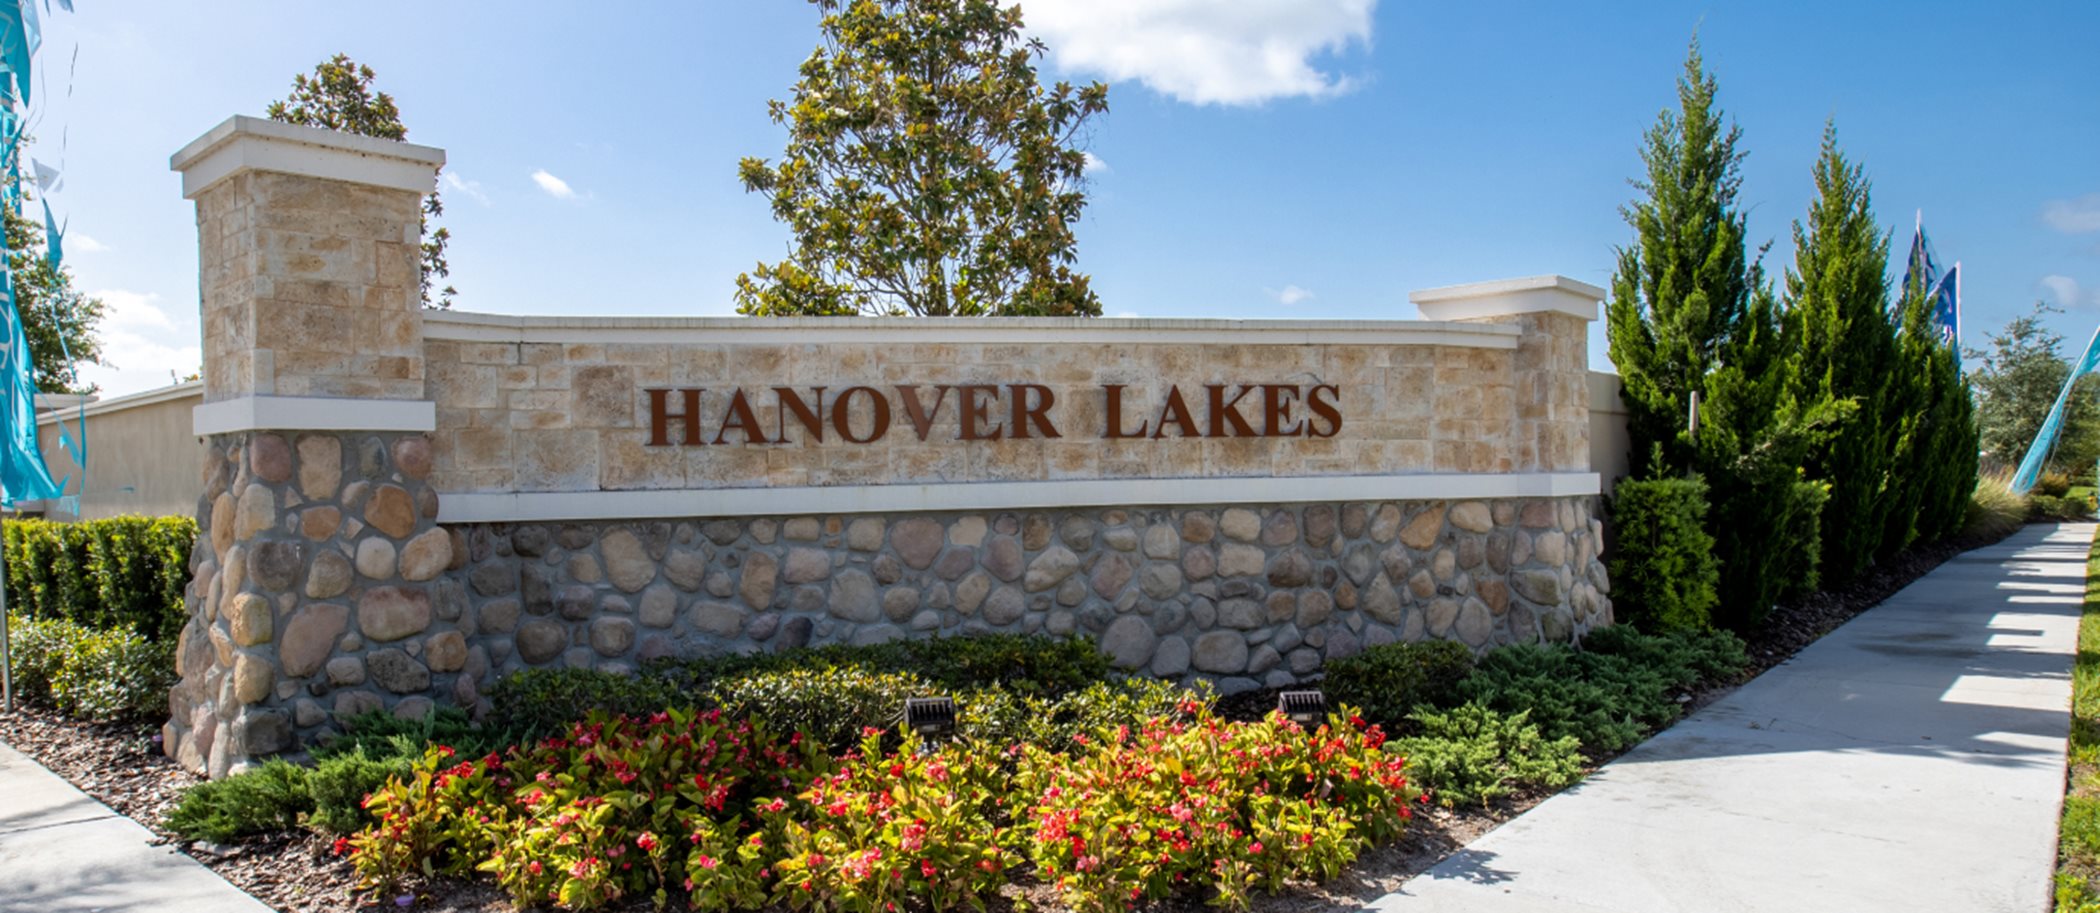 Hanover Lakes Entrance